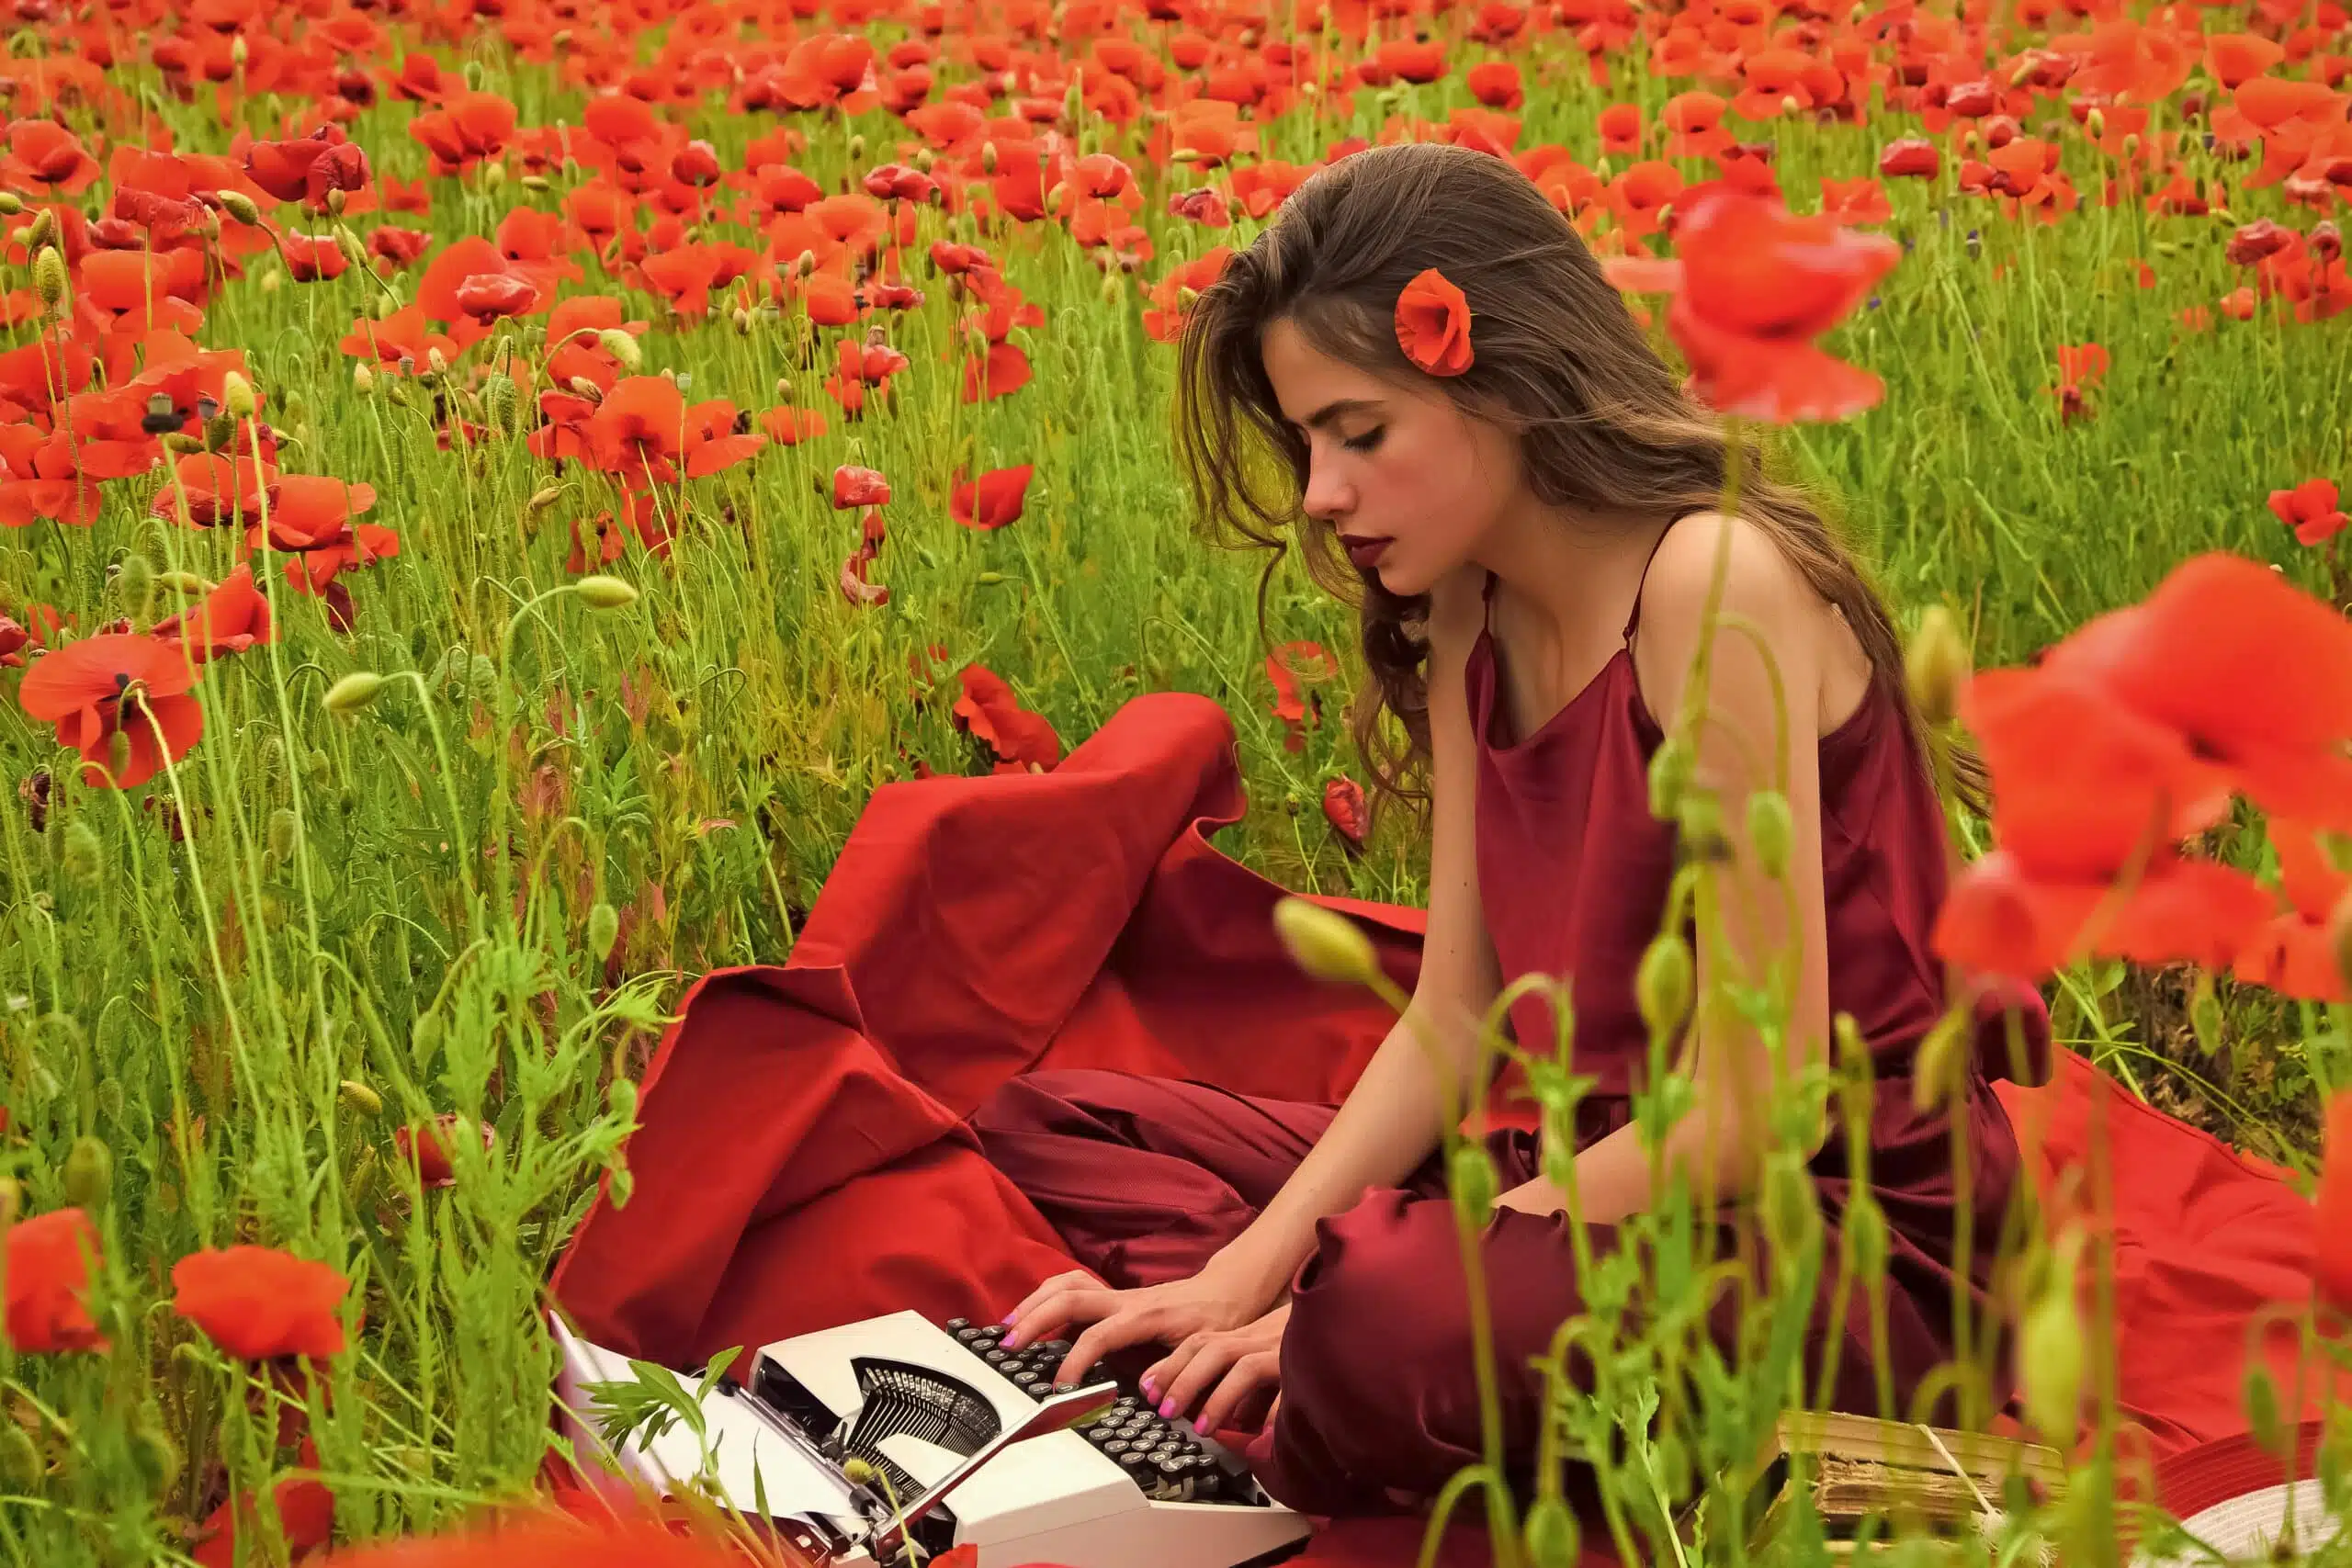 Elegant female writer in red dress typing on a typewriter in poppy flower field.